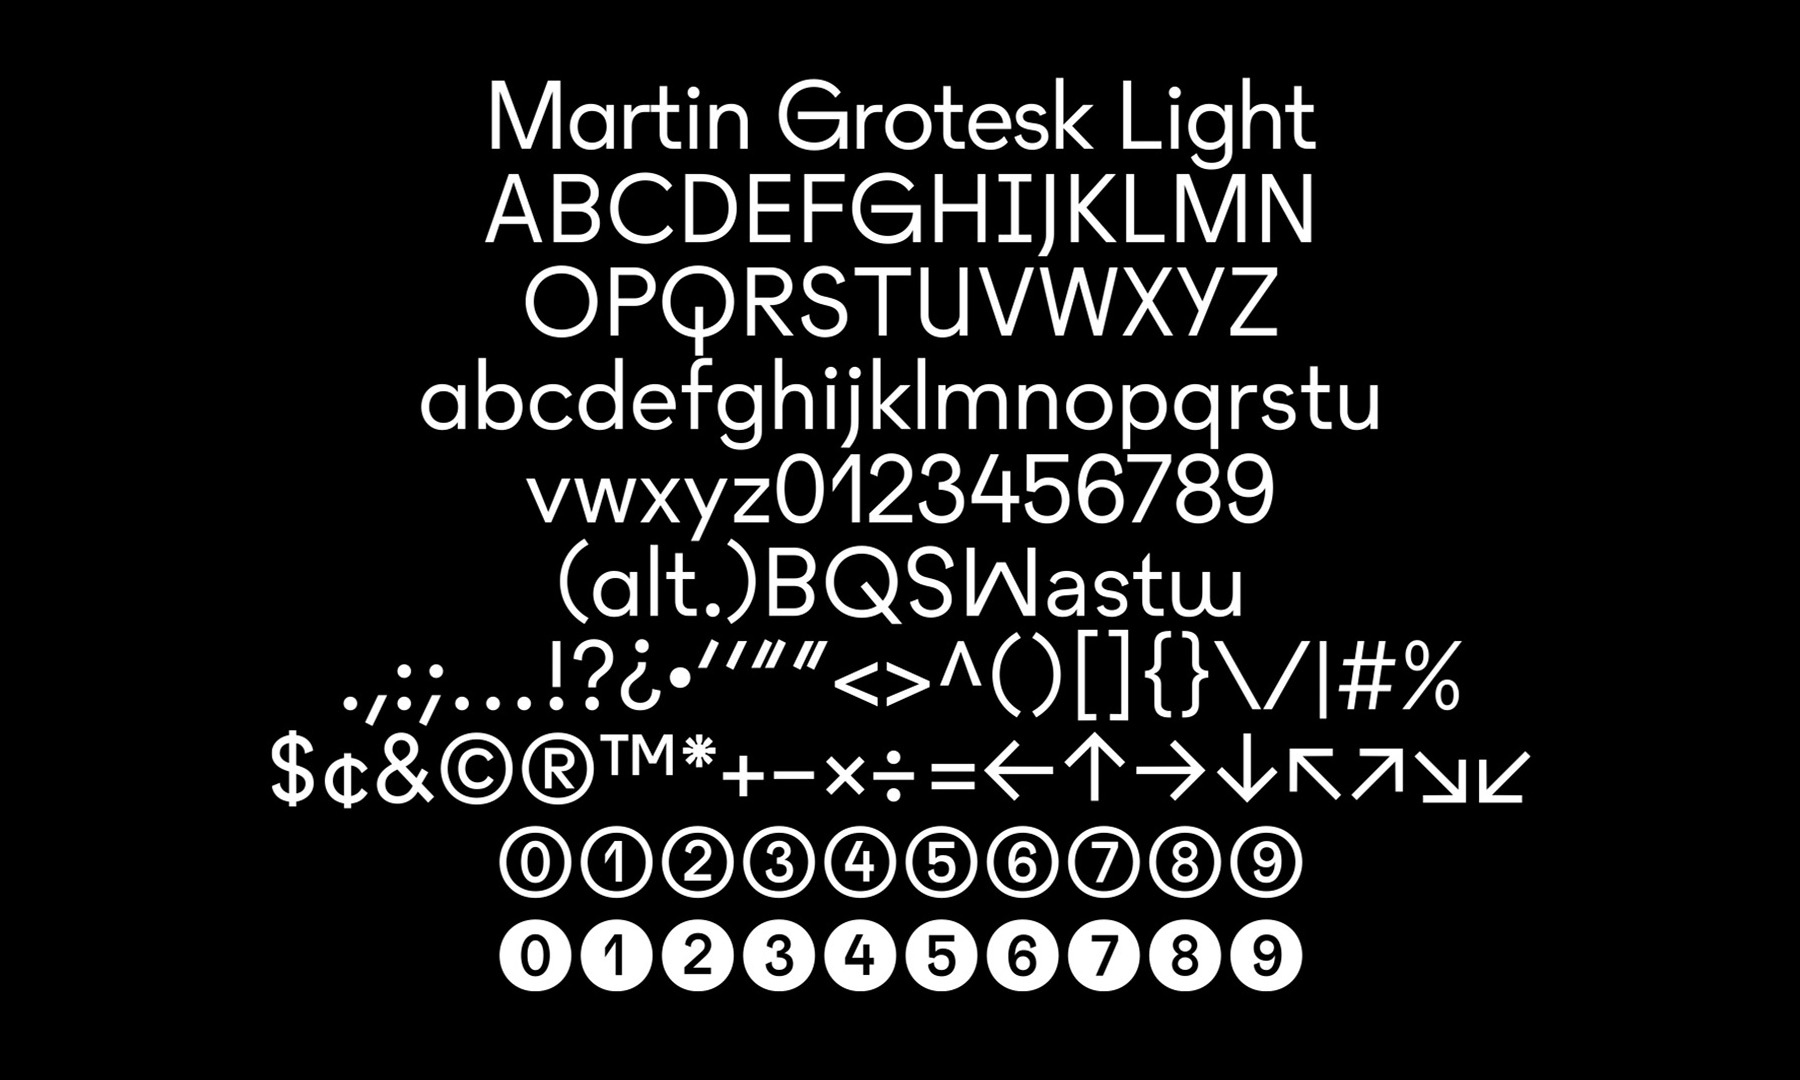 Martin Grotesk — Brooks Heintzelman, 2021